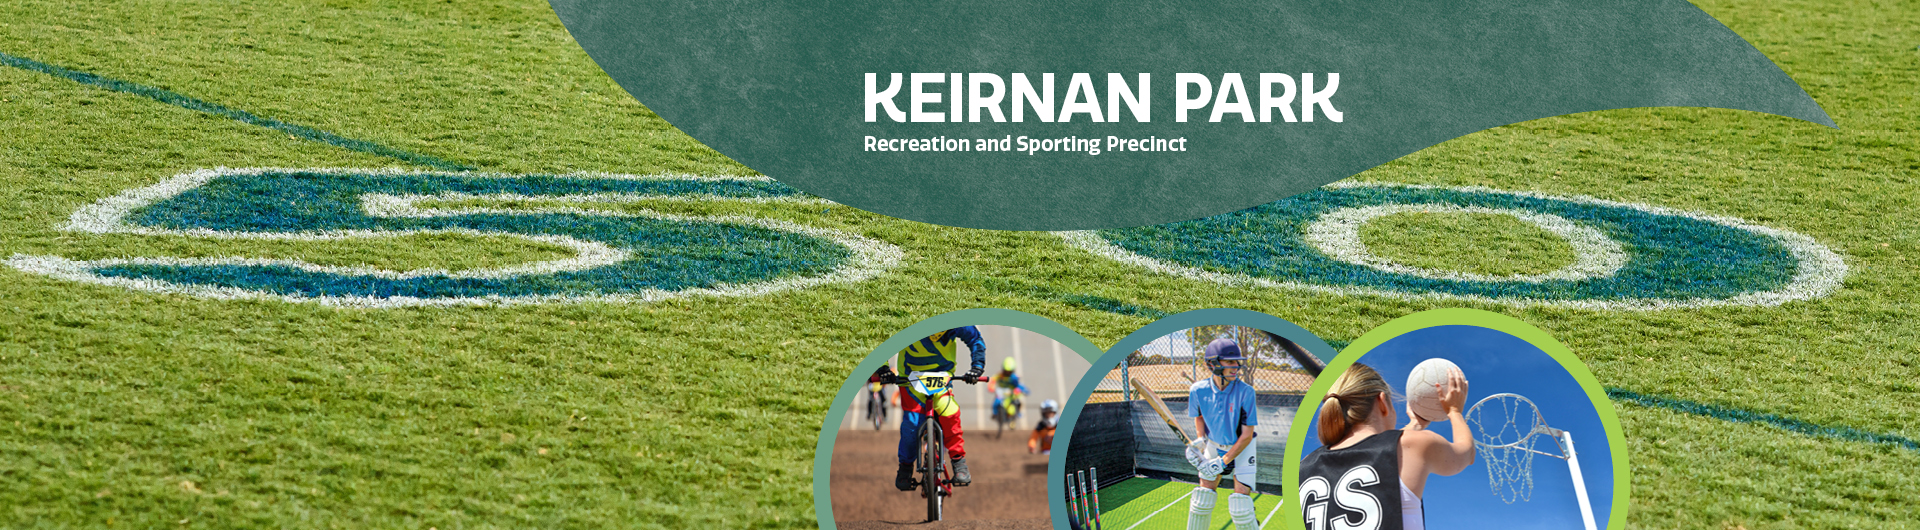 Project Update: Keirnan Park Recreation and Sporting Precinct